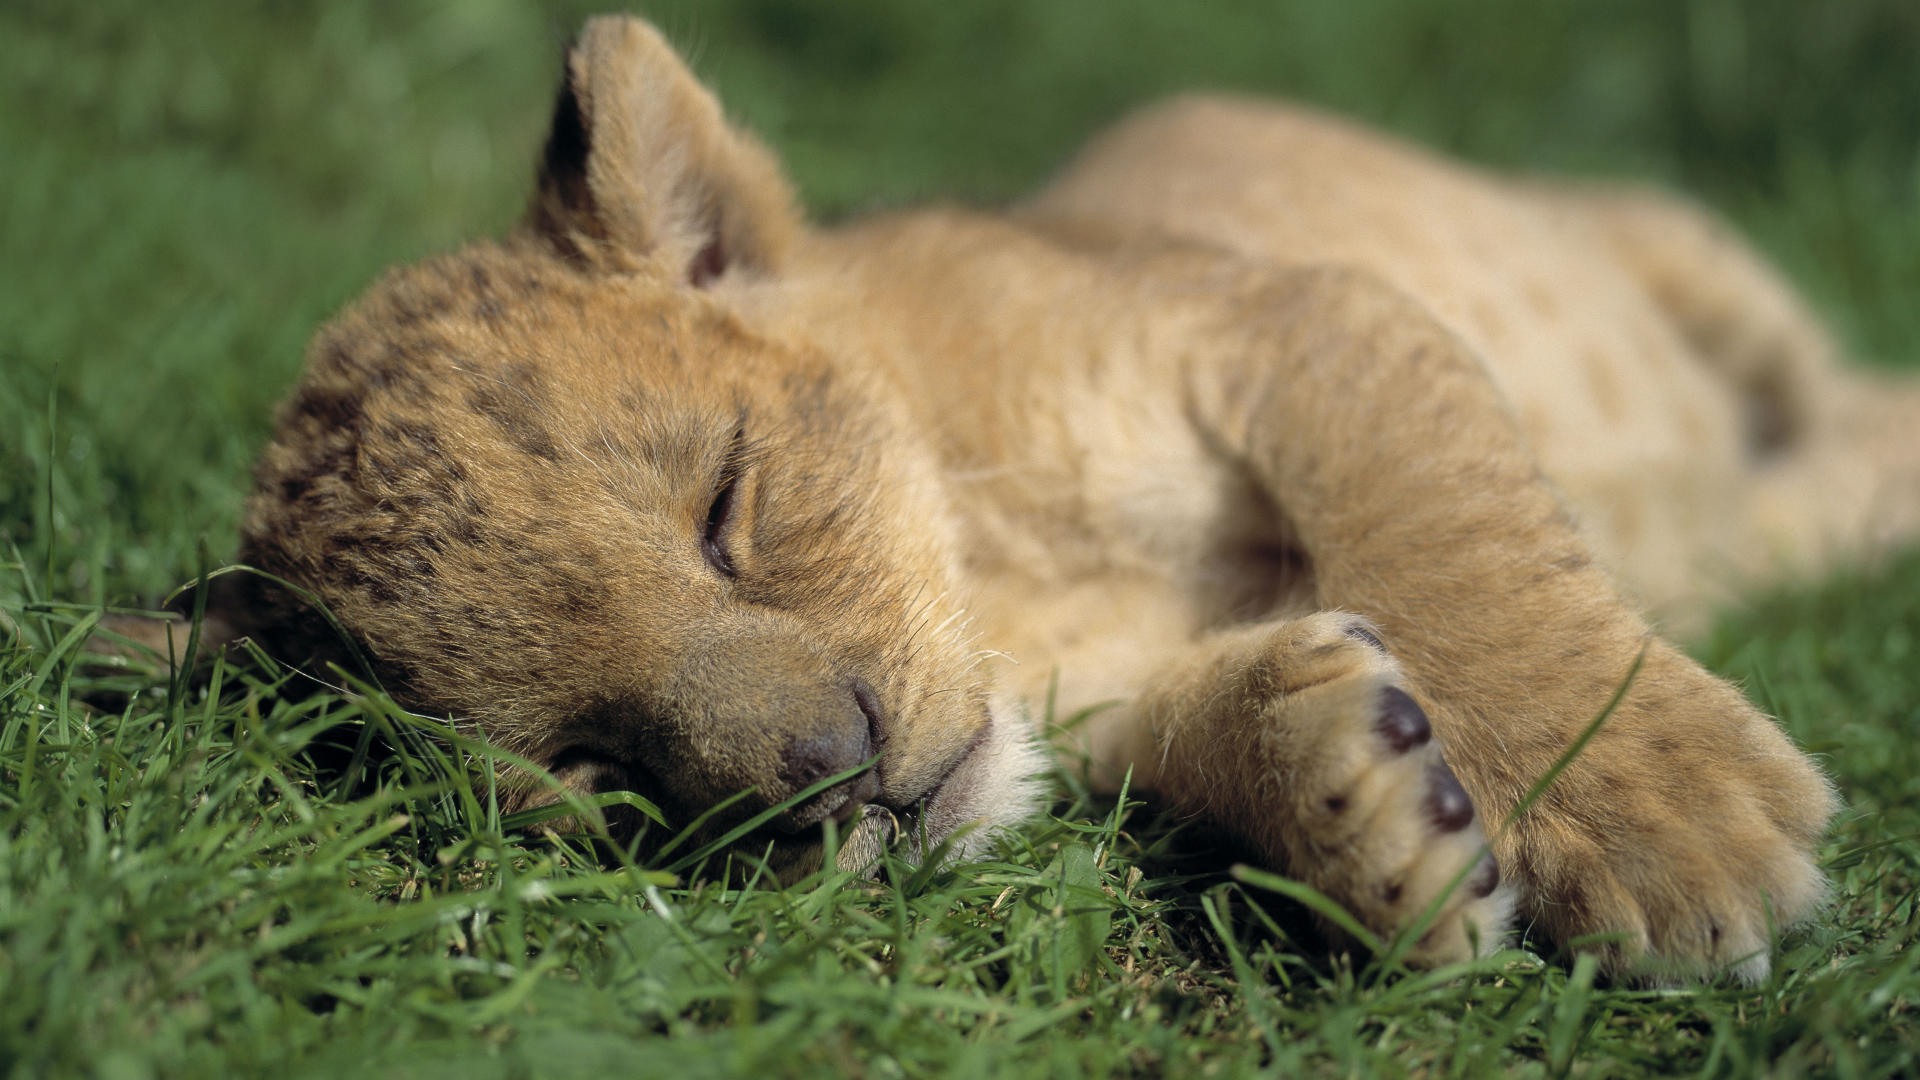 sleeping lion baby image